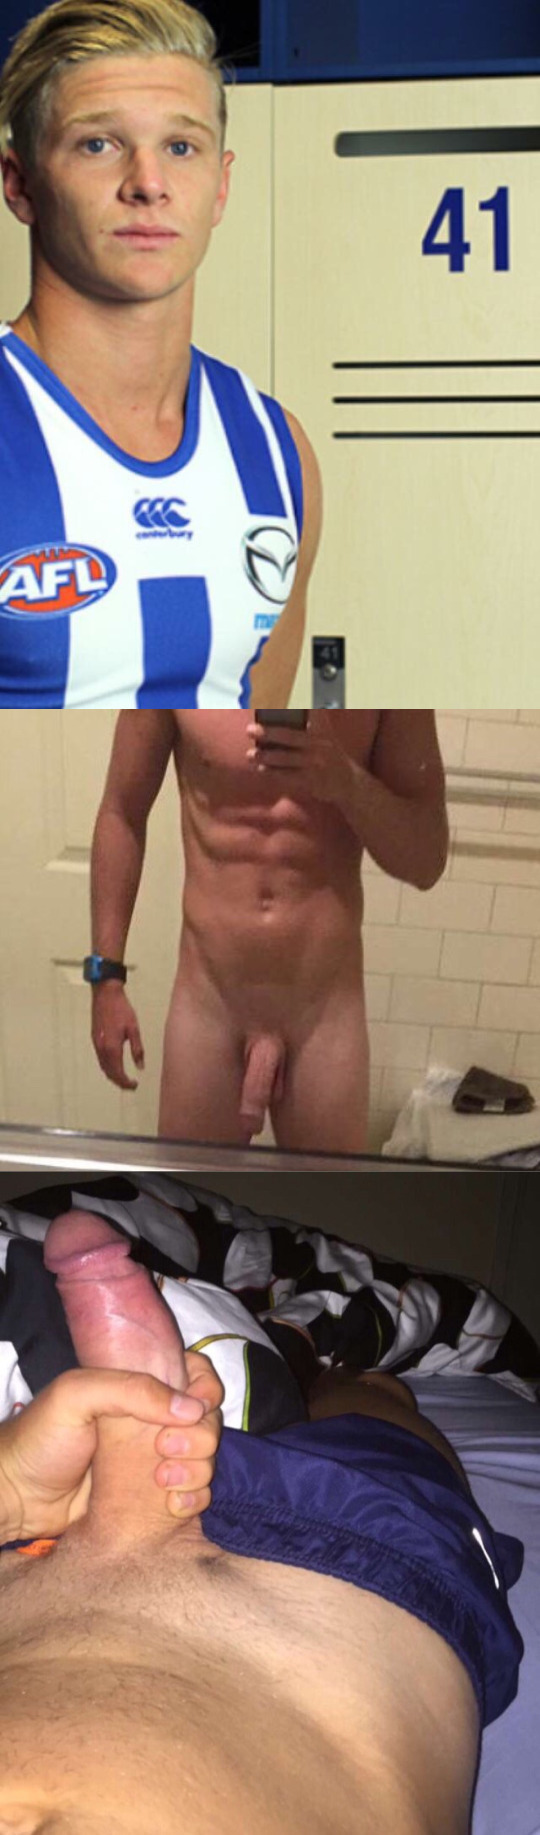 corey wagner stolen naked selfie hard dick